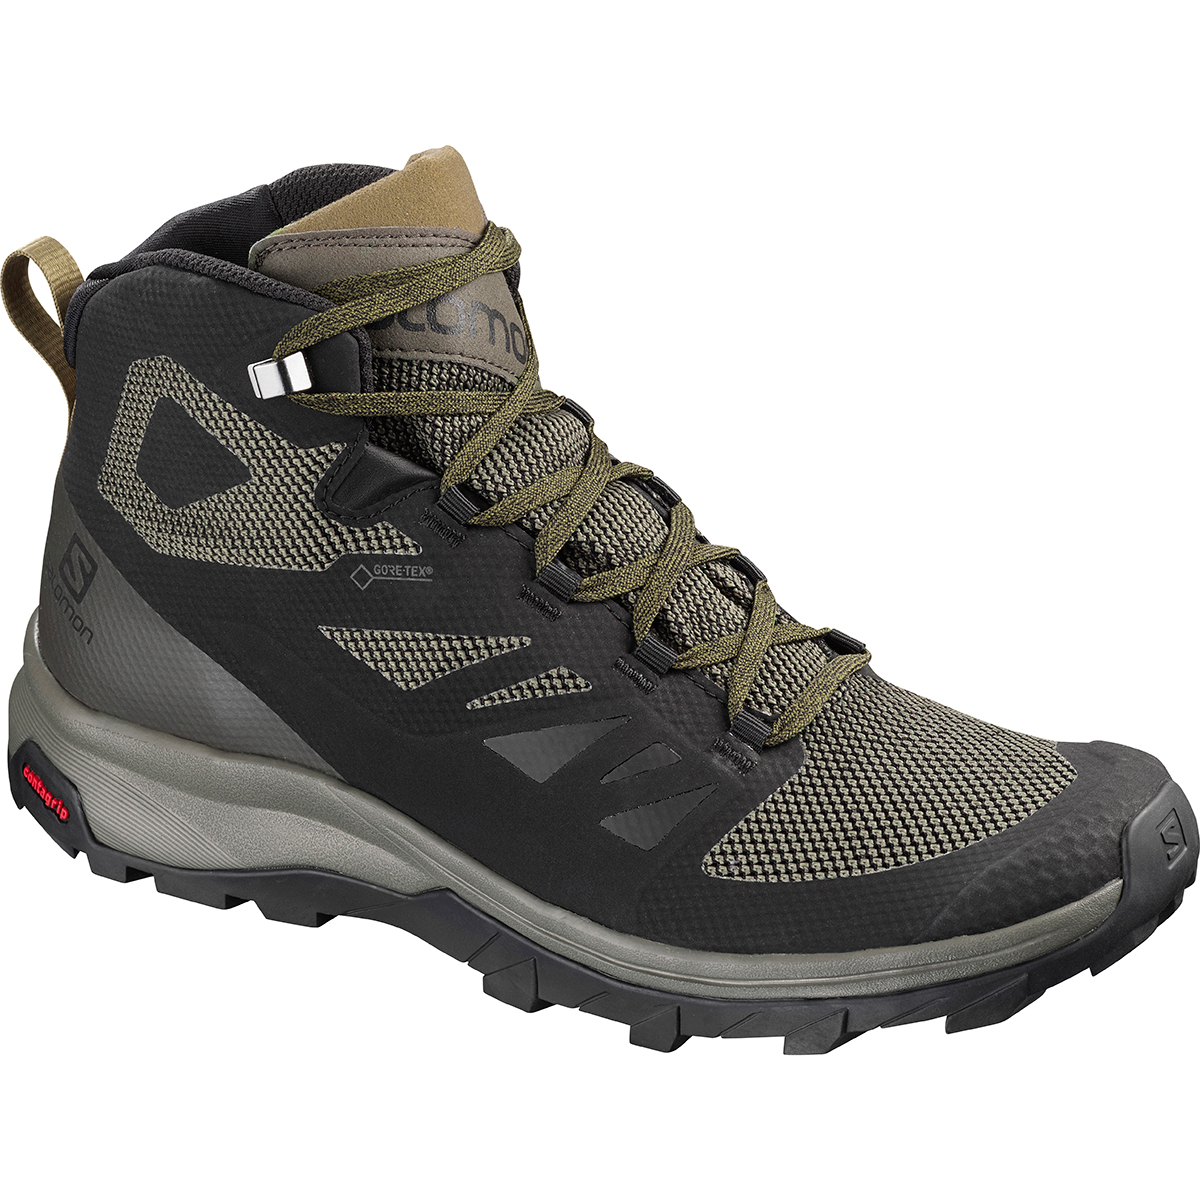 Salomon Men's Outline Mid Gtx Waterproof Hiking Boots - Size 13